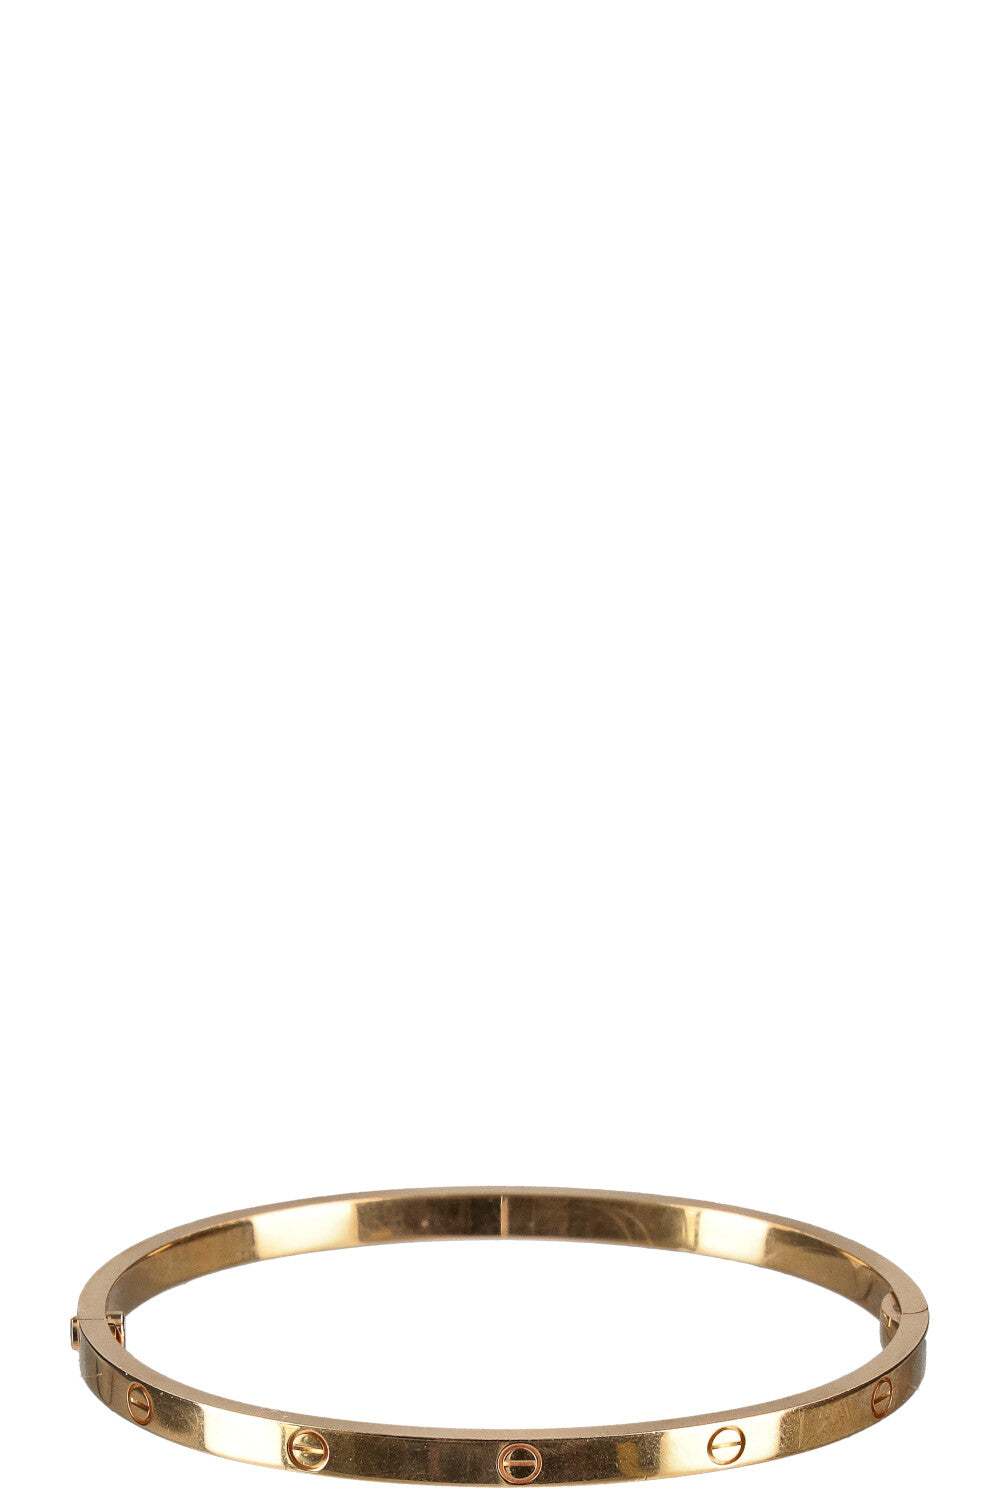 Cartier 18ct Gold Love Bangle Bracelet with Diamonds